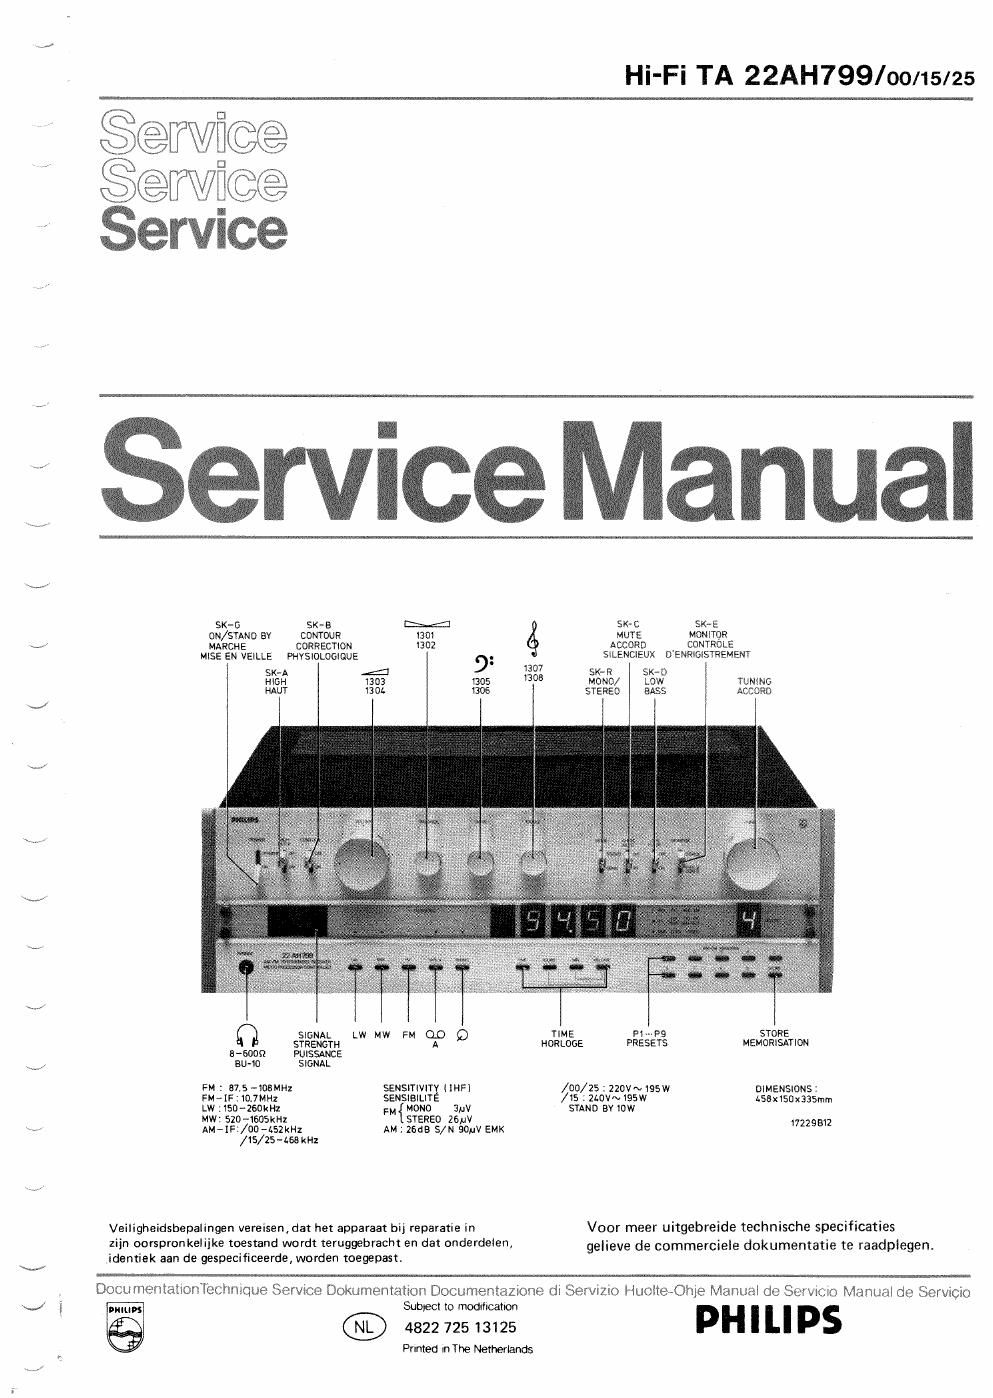 philips 22 ah 799 int service manual